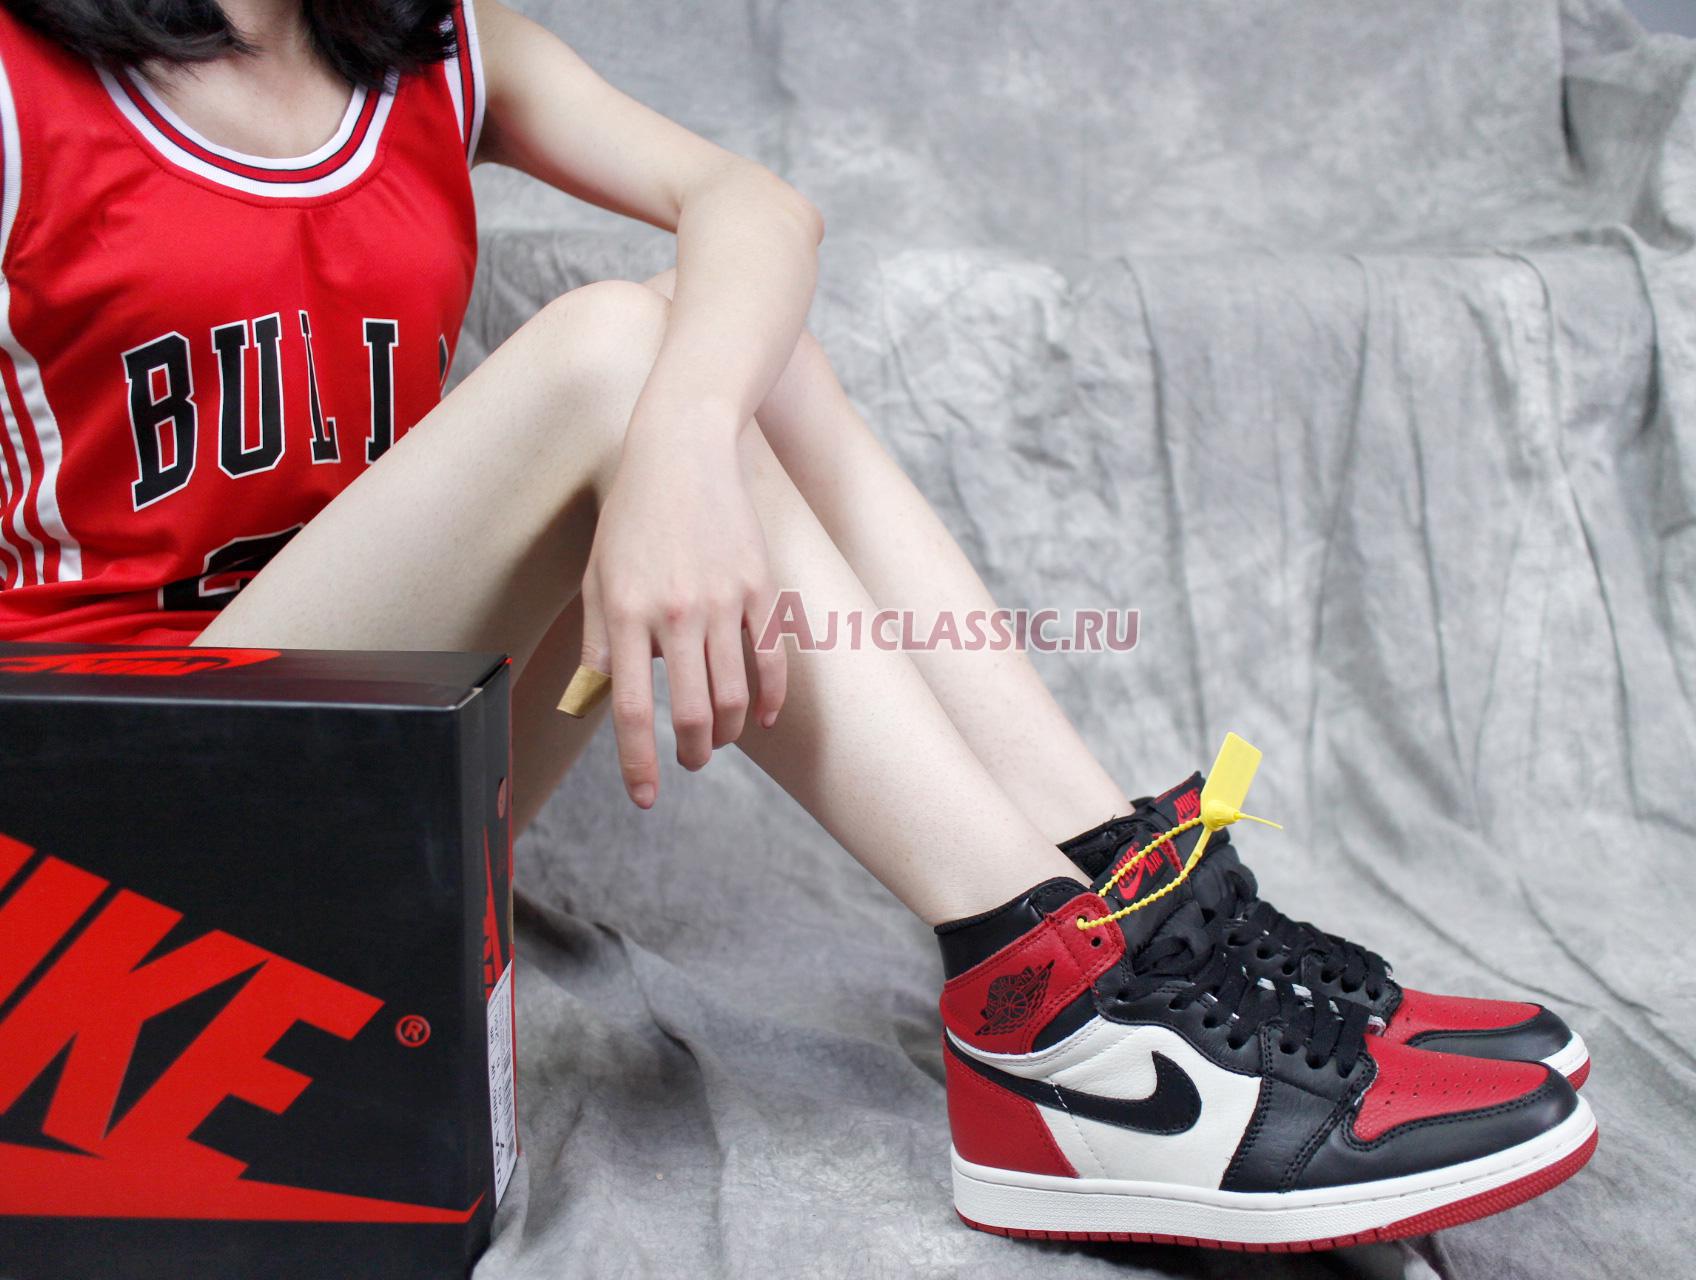 Air Jordan 1 Retro High OG Bred Toe 555088-610 Gym Red/Black-Summit White Sneakers